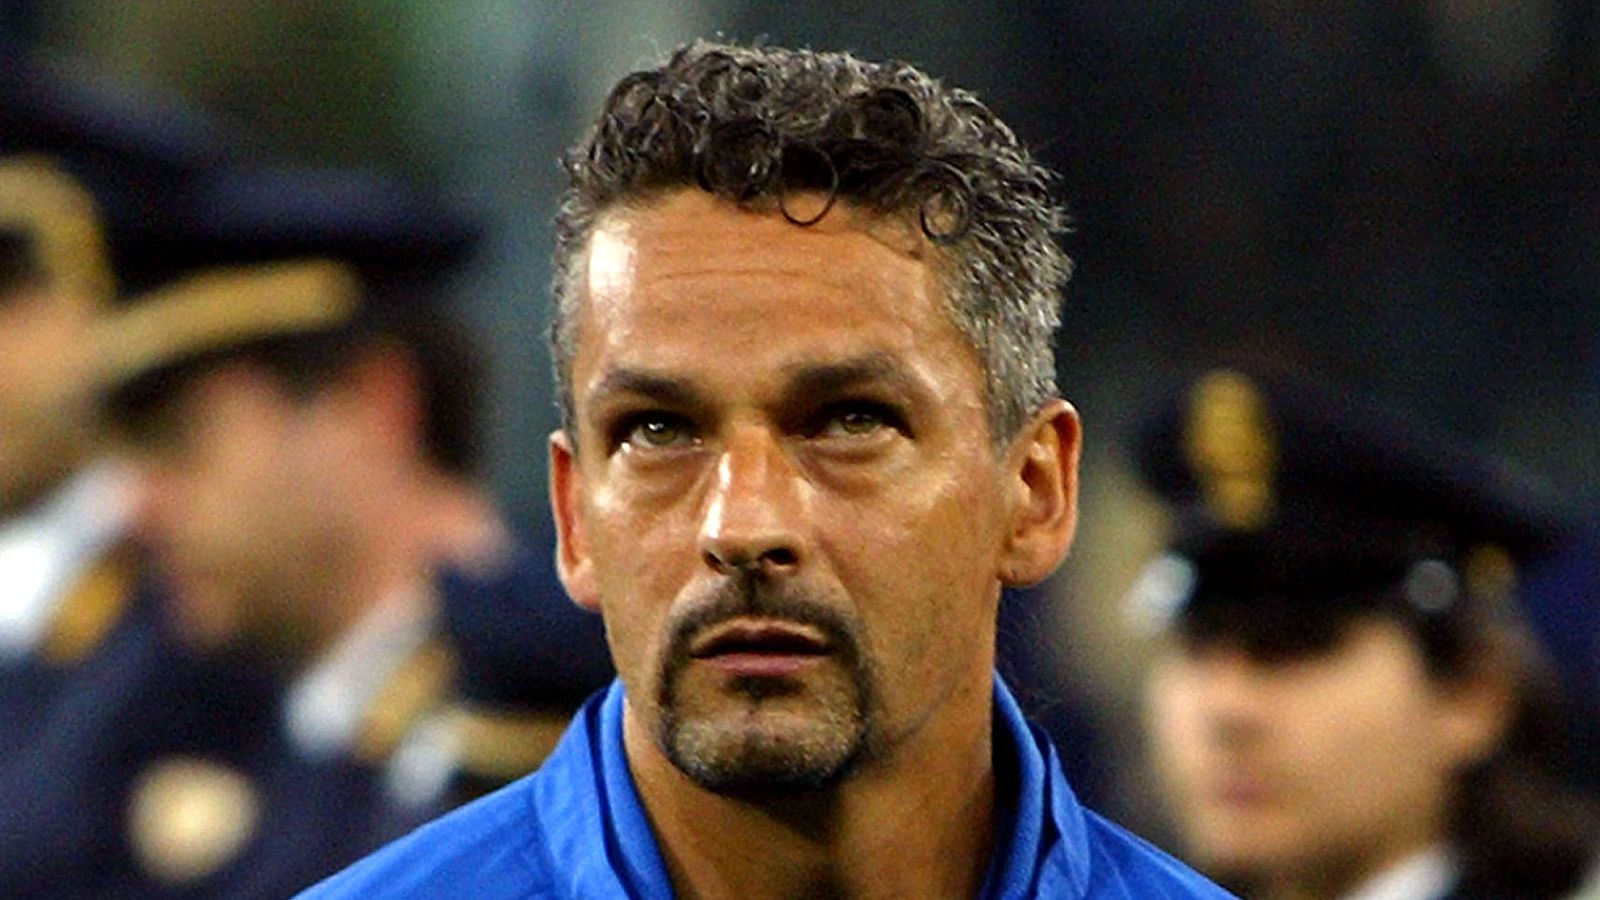 Roberto Baggio: Former Italian football star robbed at gunpoint while  watching Italy-Spain game | World News | Sky News